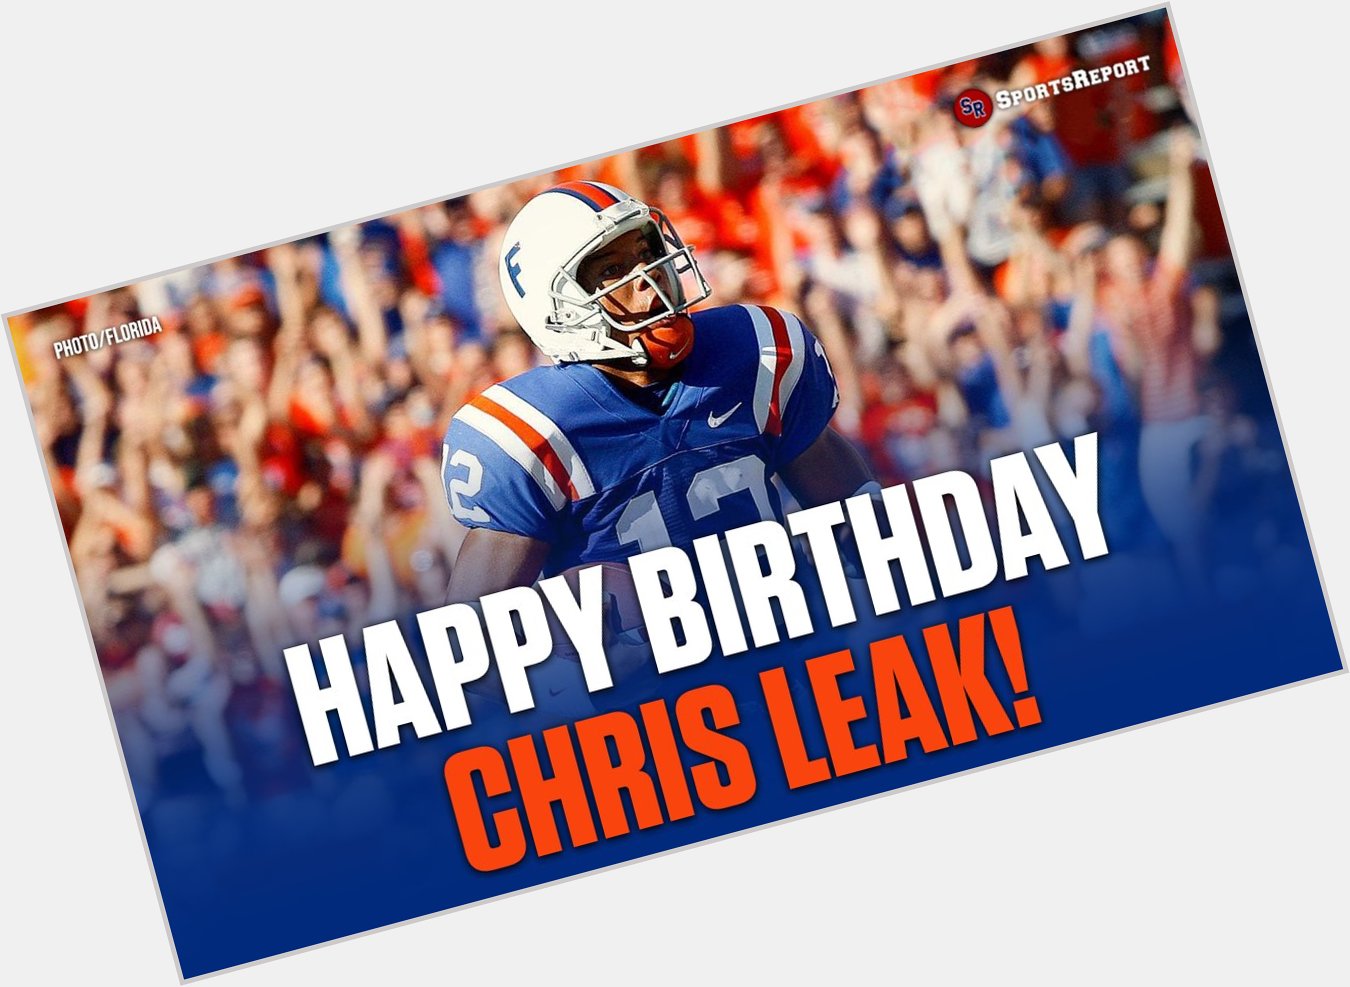  Fans, let\s wish great Chris Leak a Happy Birthday! 